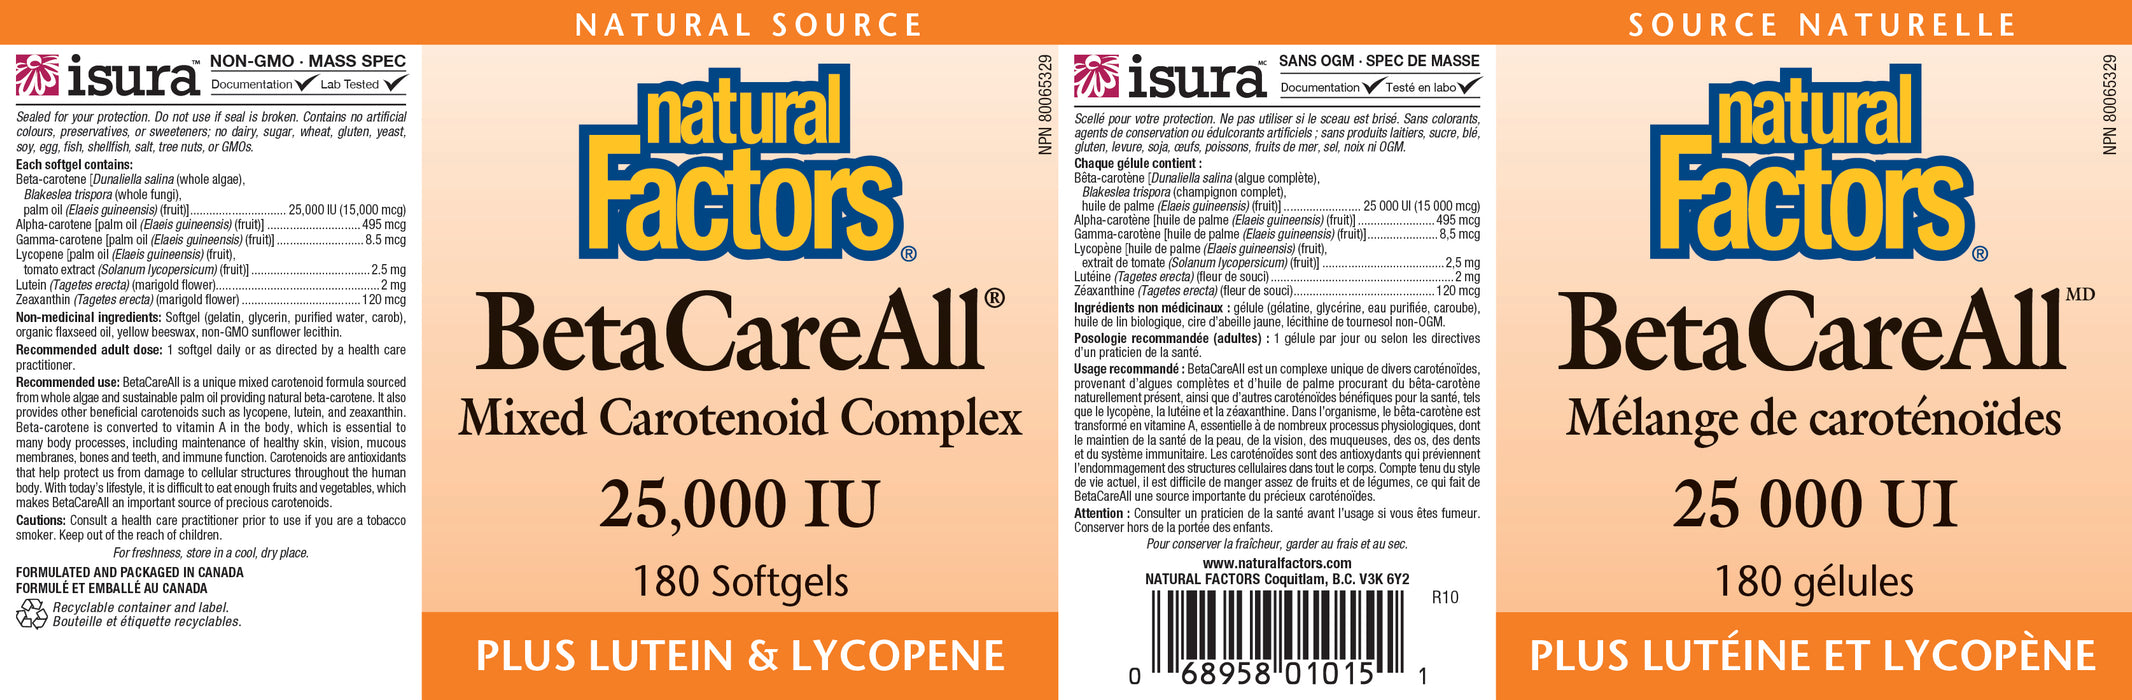 Natural Factors BetaCareAll Mixed Carotenoid Complex 25,000iu 180 Gelatin Softgels